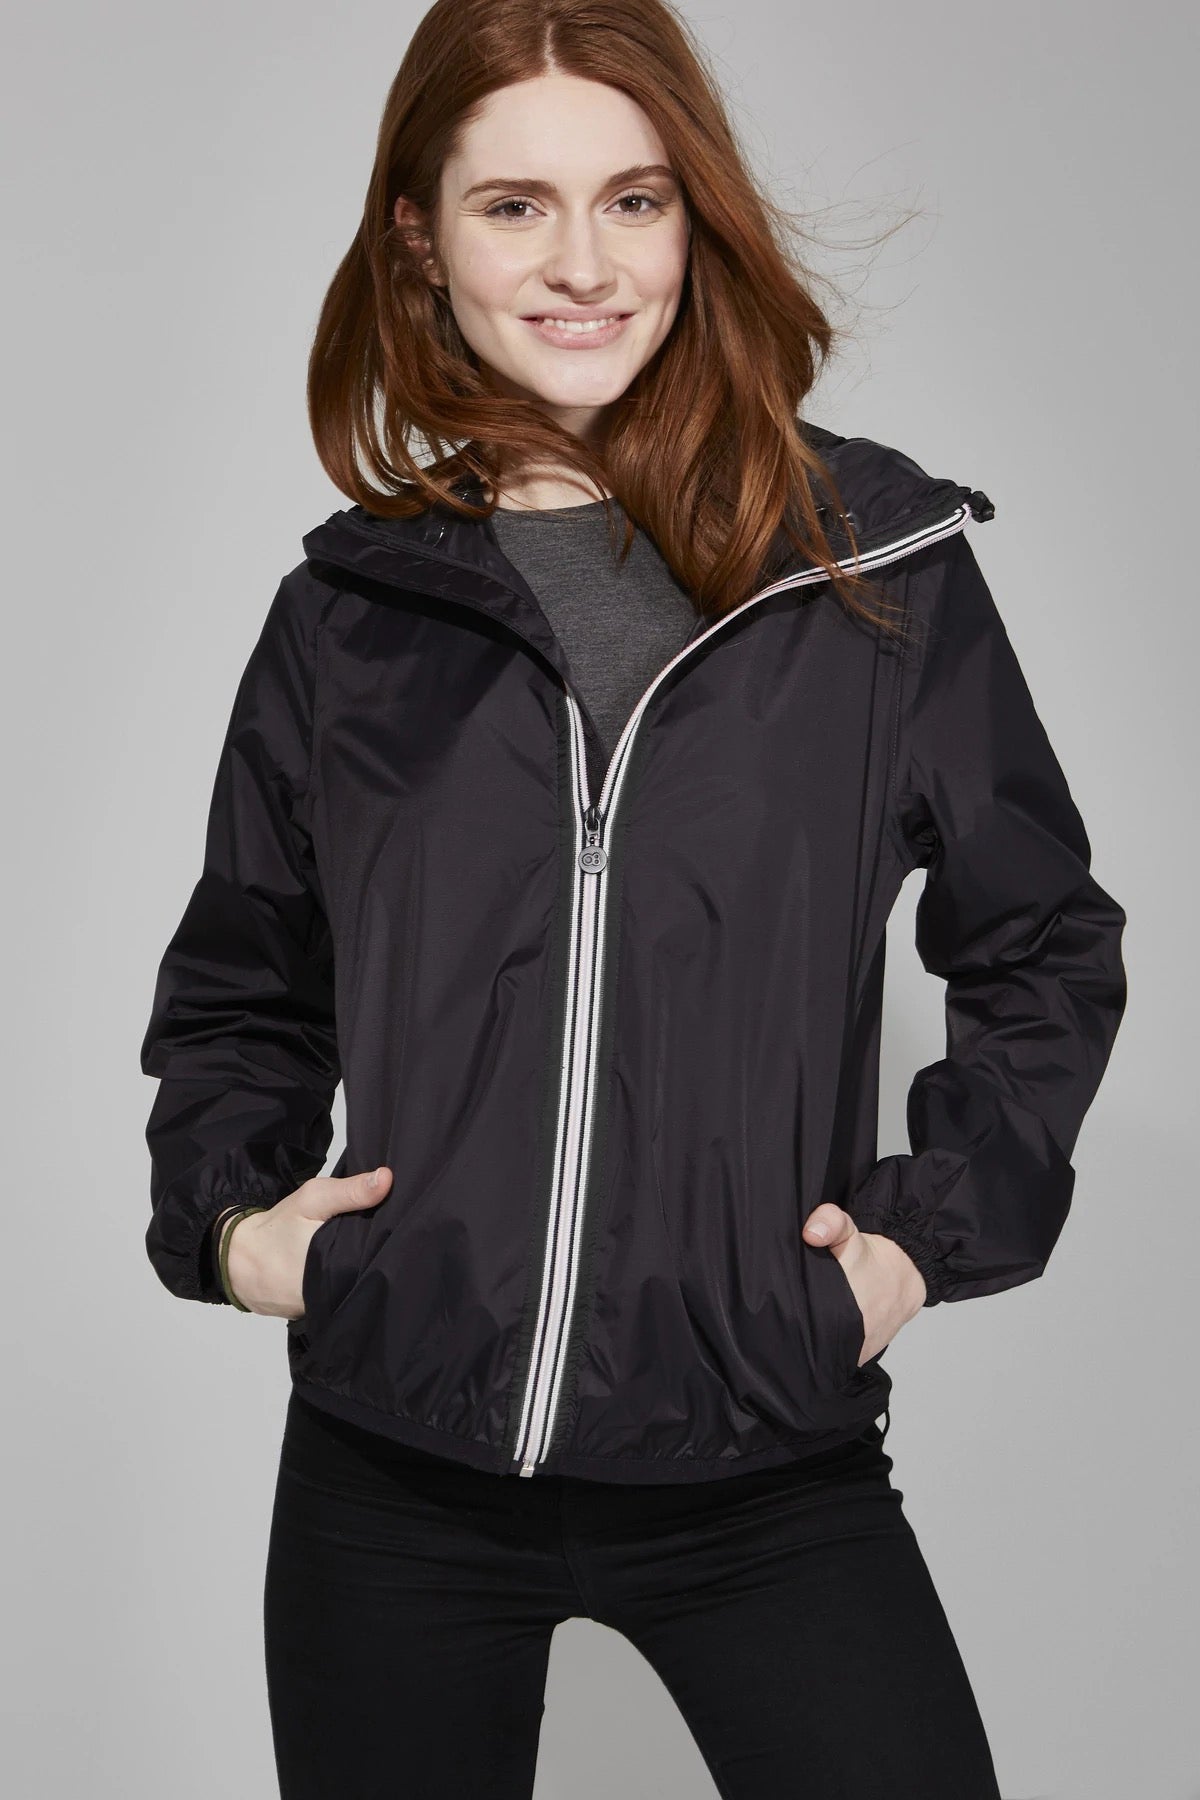 Full Zip Packable Rain Jacket and Windbreaker in Black - O8Lifestyle